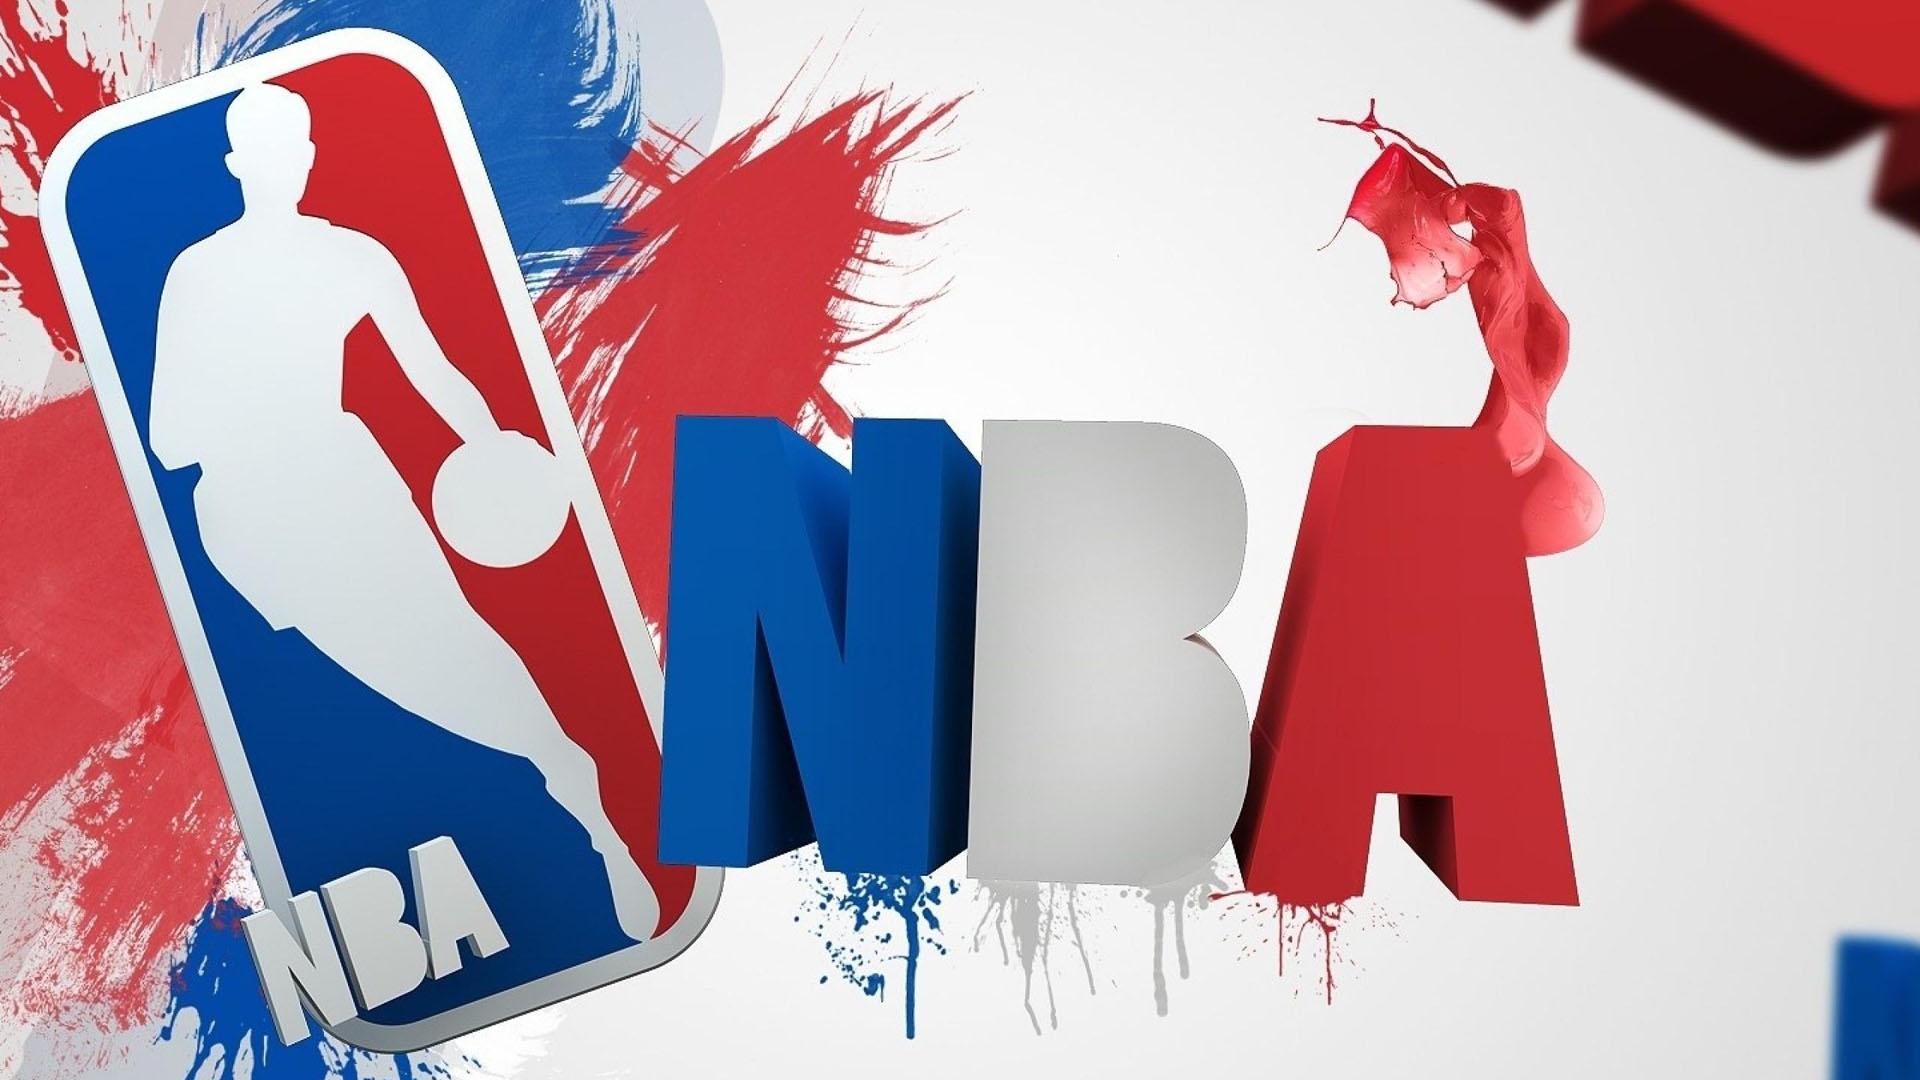 Nba Basketball Logo Wallpapers Hd Desktop 3256 1023 Wallpapers